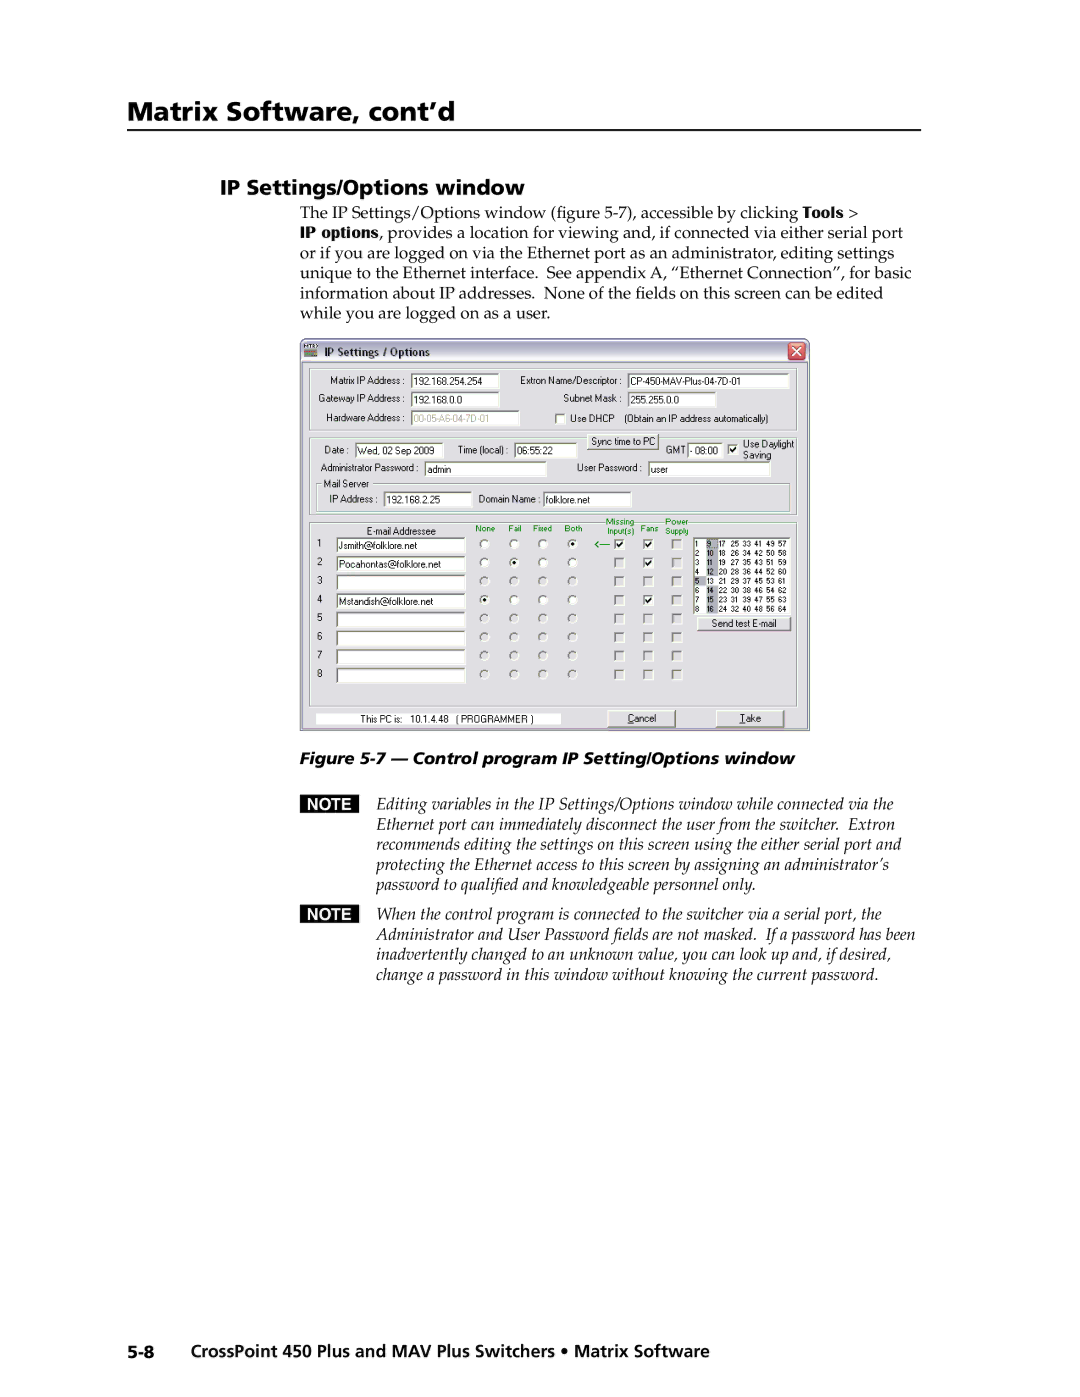 Extron electronic MAV Plus Series manual IP Settings/Options window, Control program IP Setting/Options window 